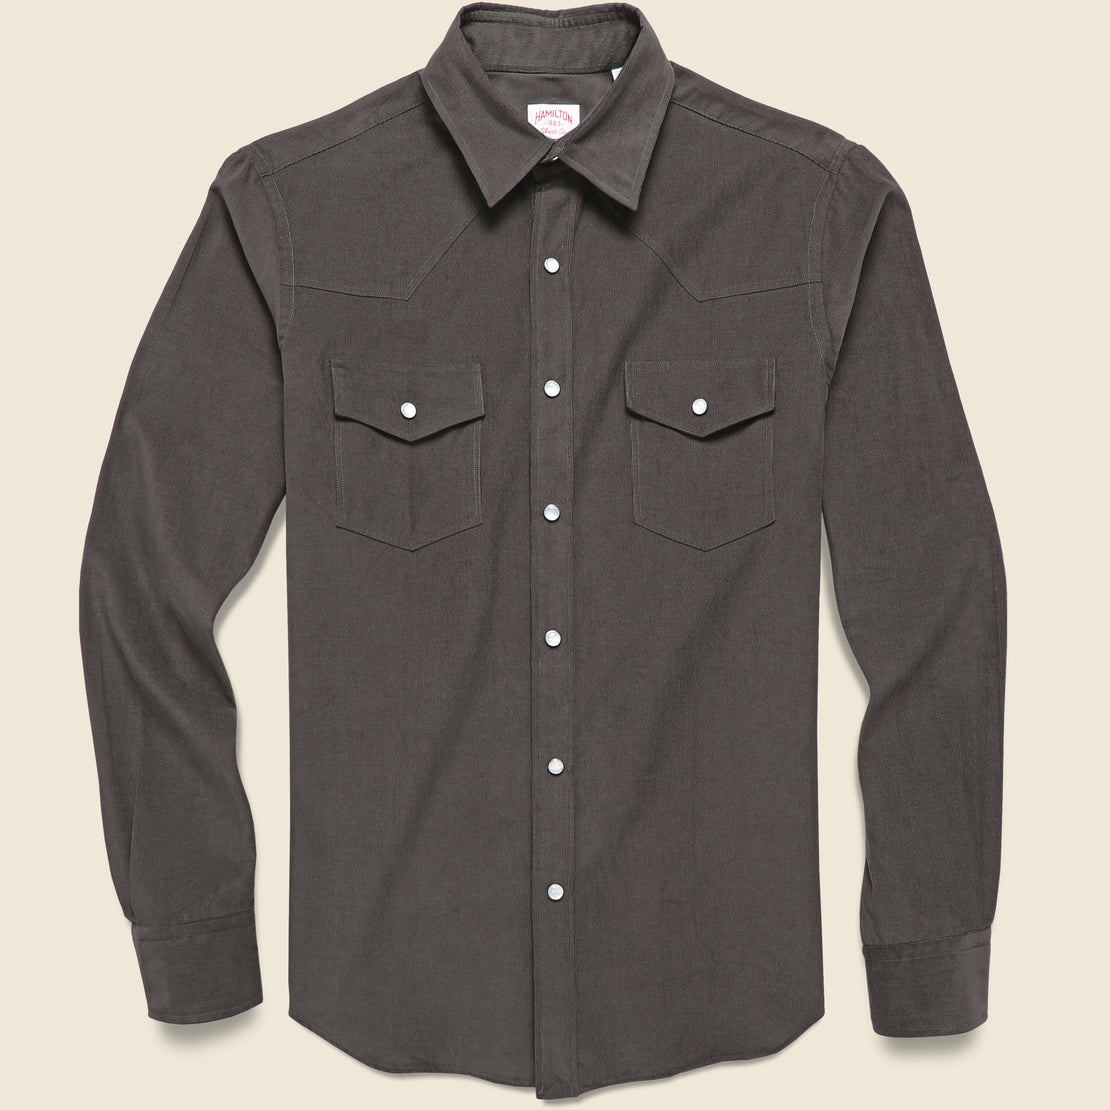 Hamilton Shirt Co. Micro Corduroy Western Shirt - Brown